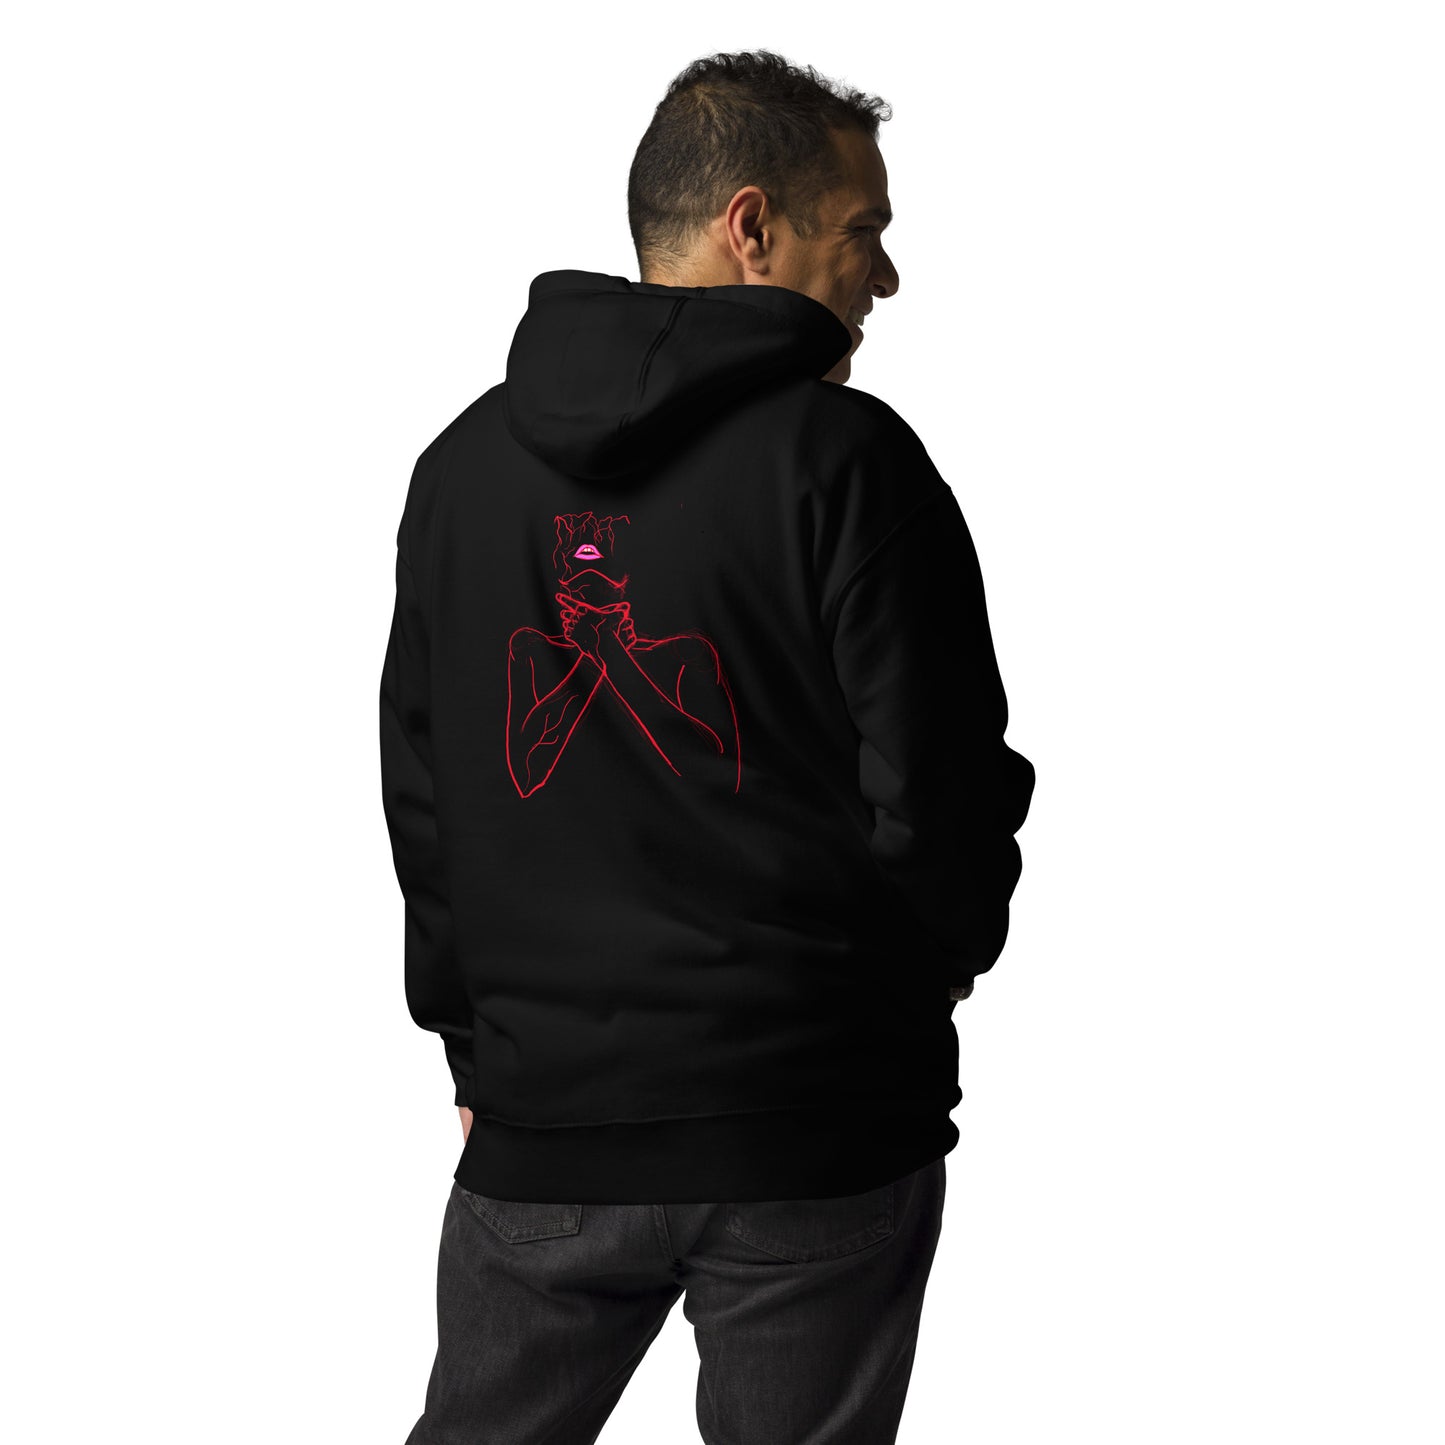 black hoodie with breathe illustration